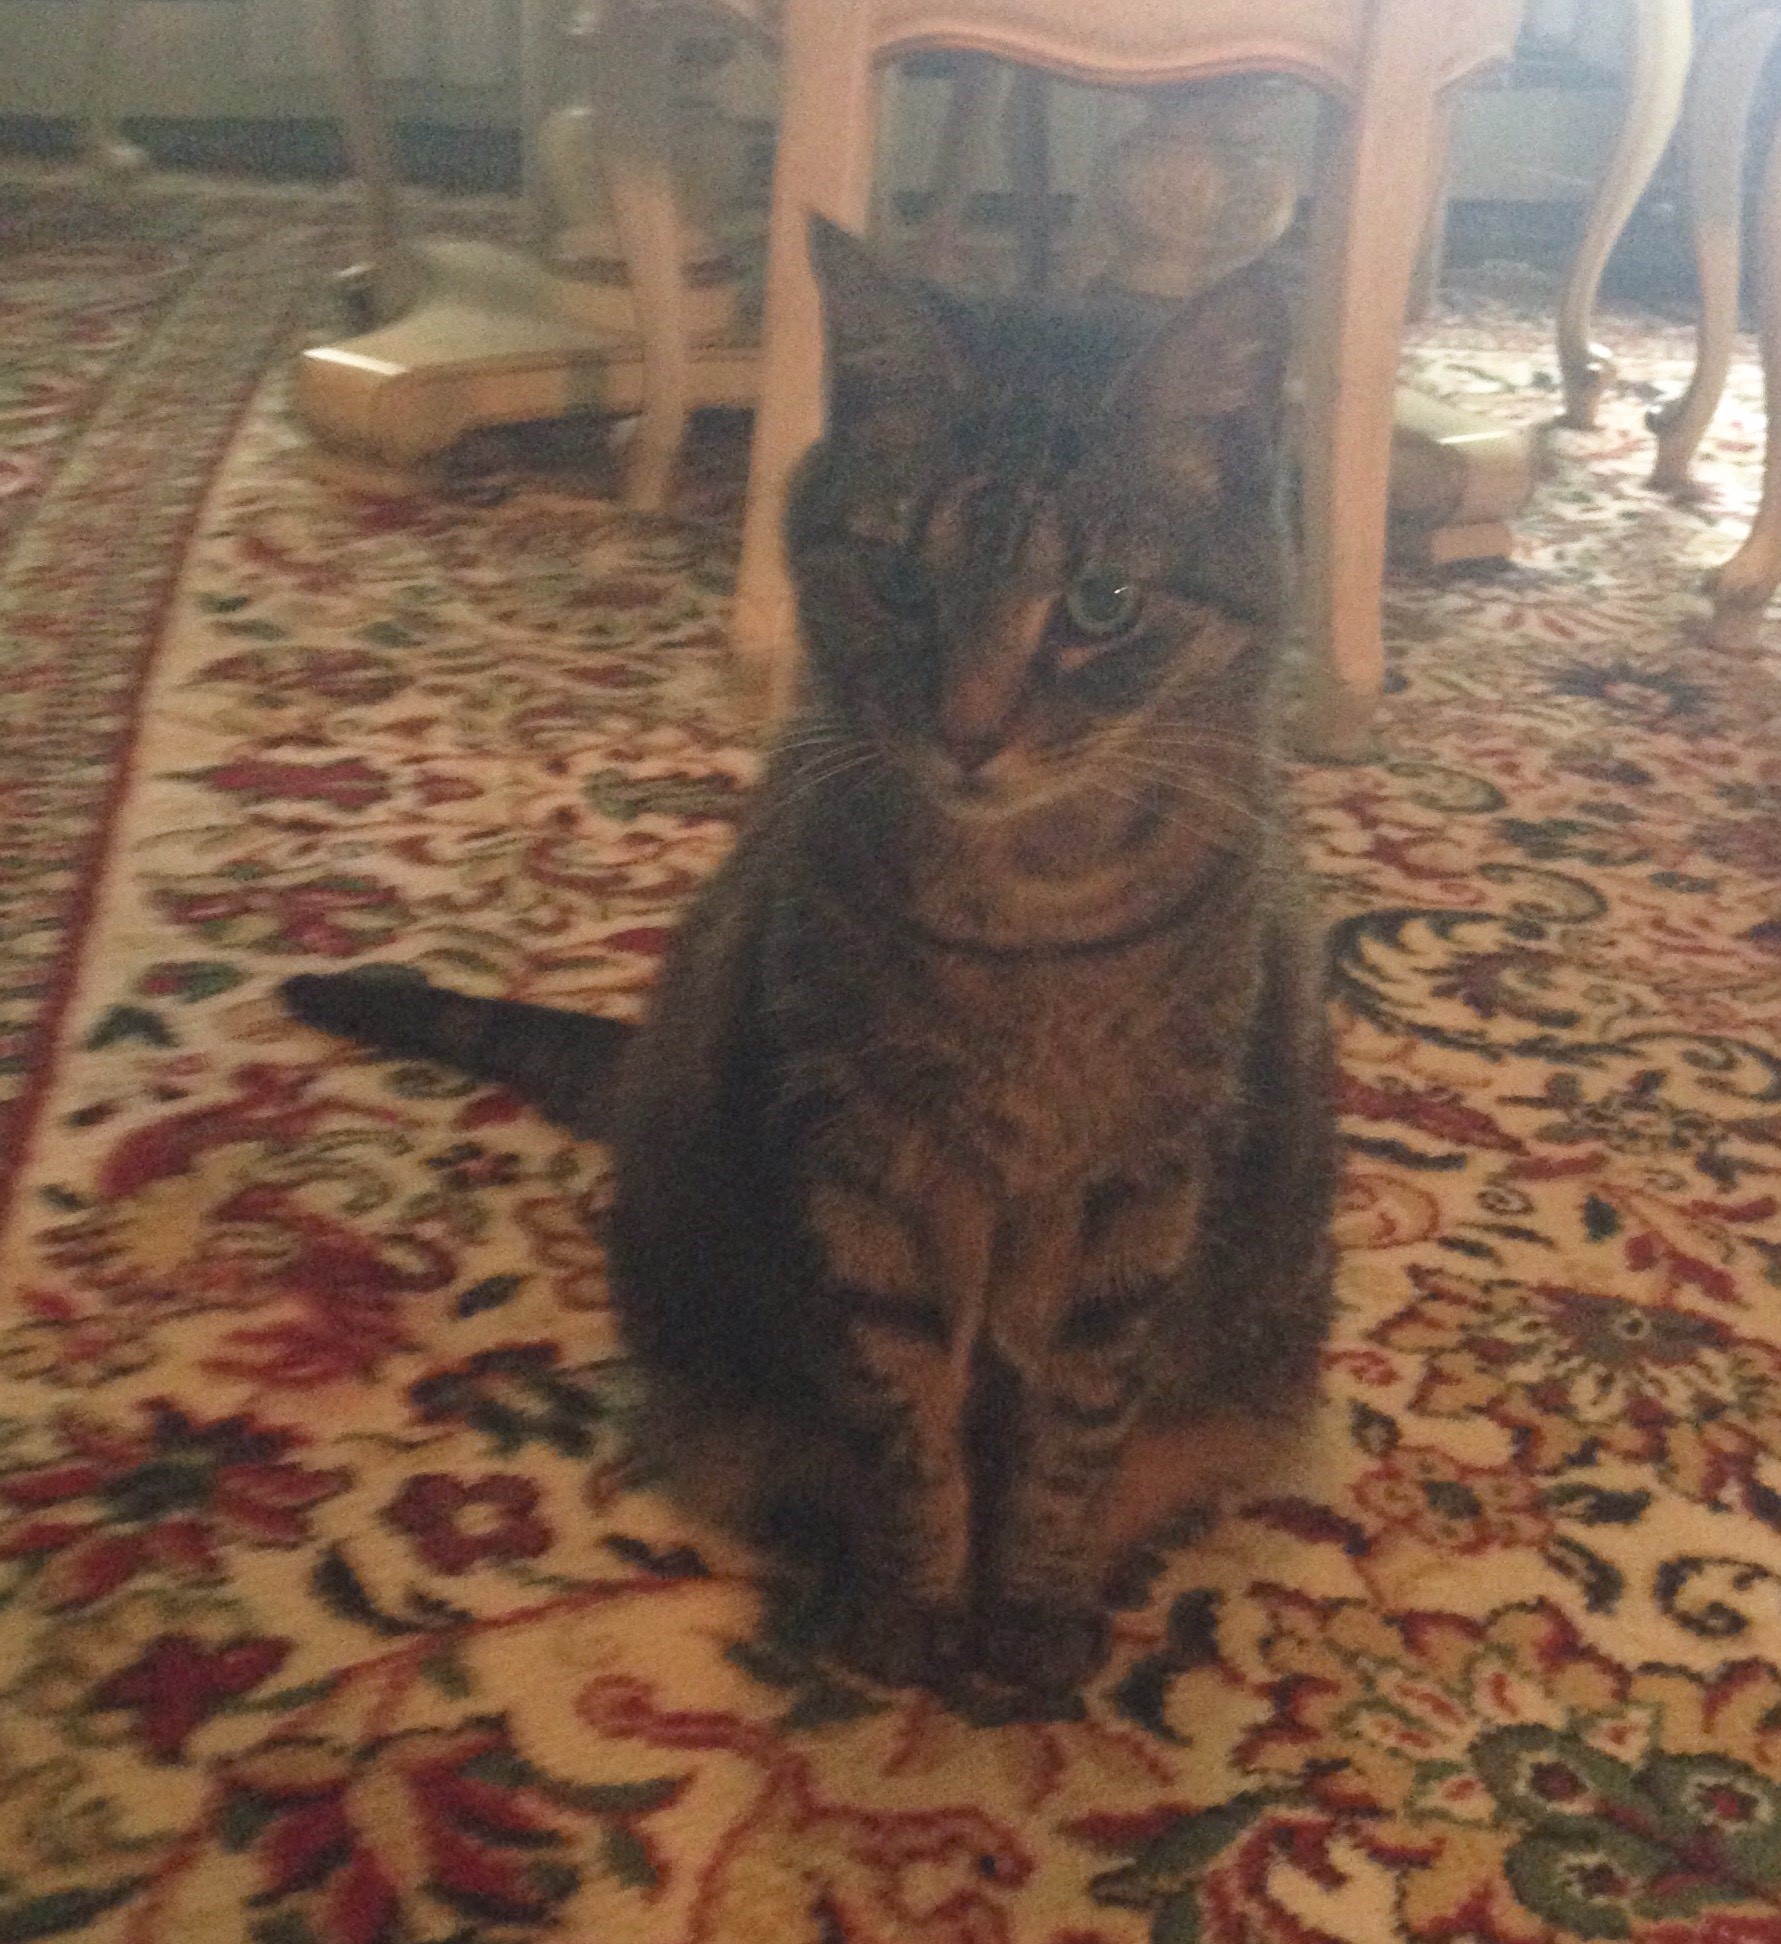 A cat sitting on a carpet